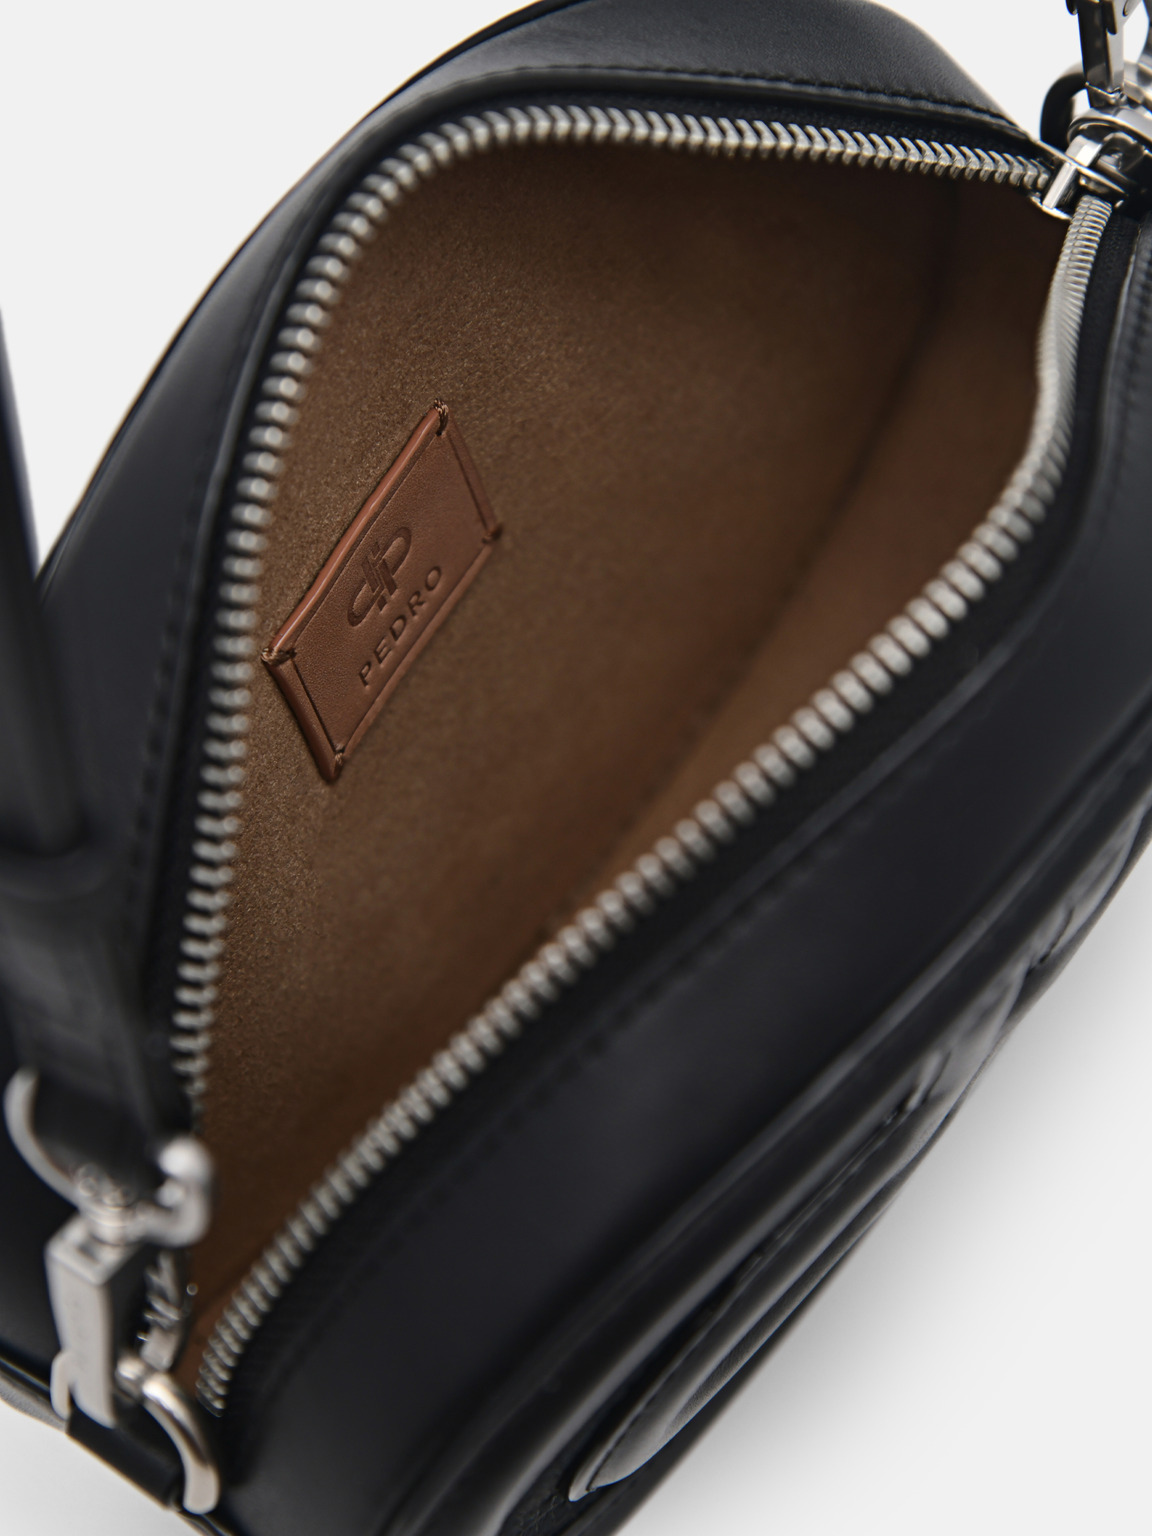 PEDRO Icon Round Leather Shoulder Bag, Black